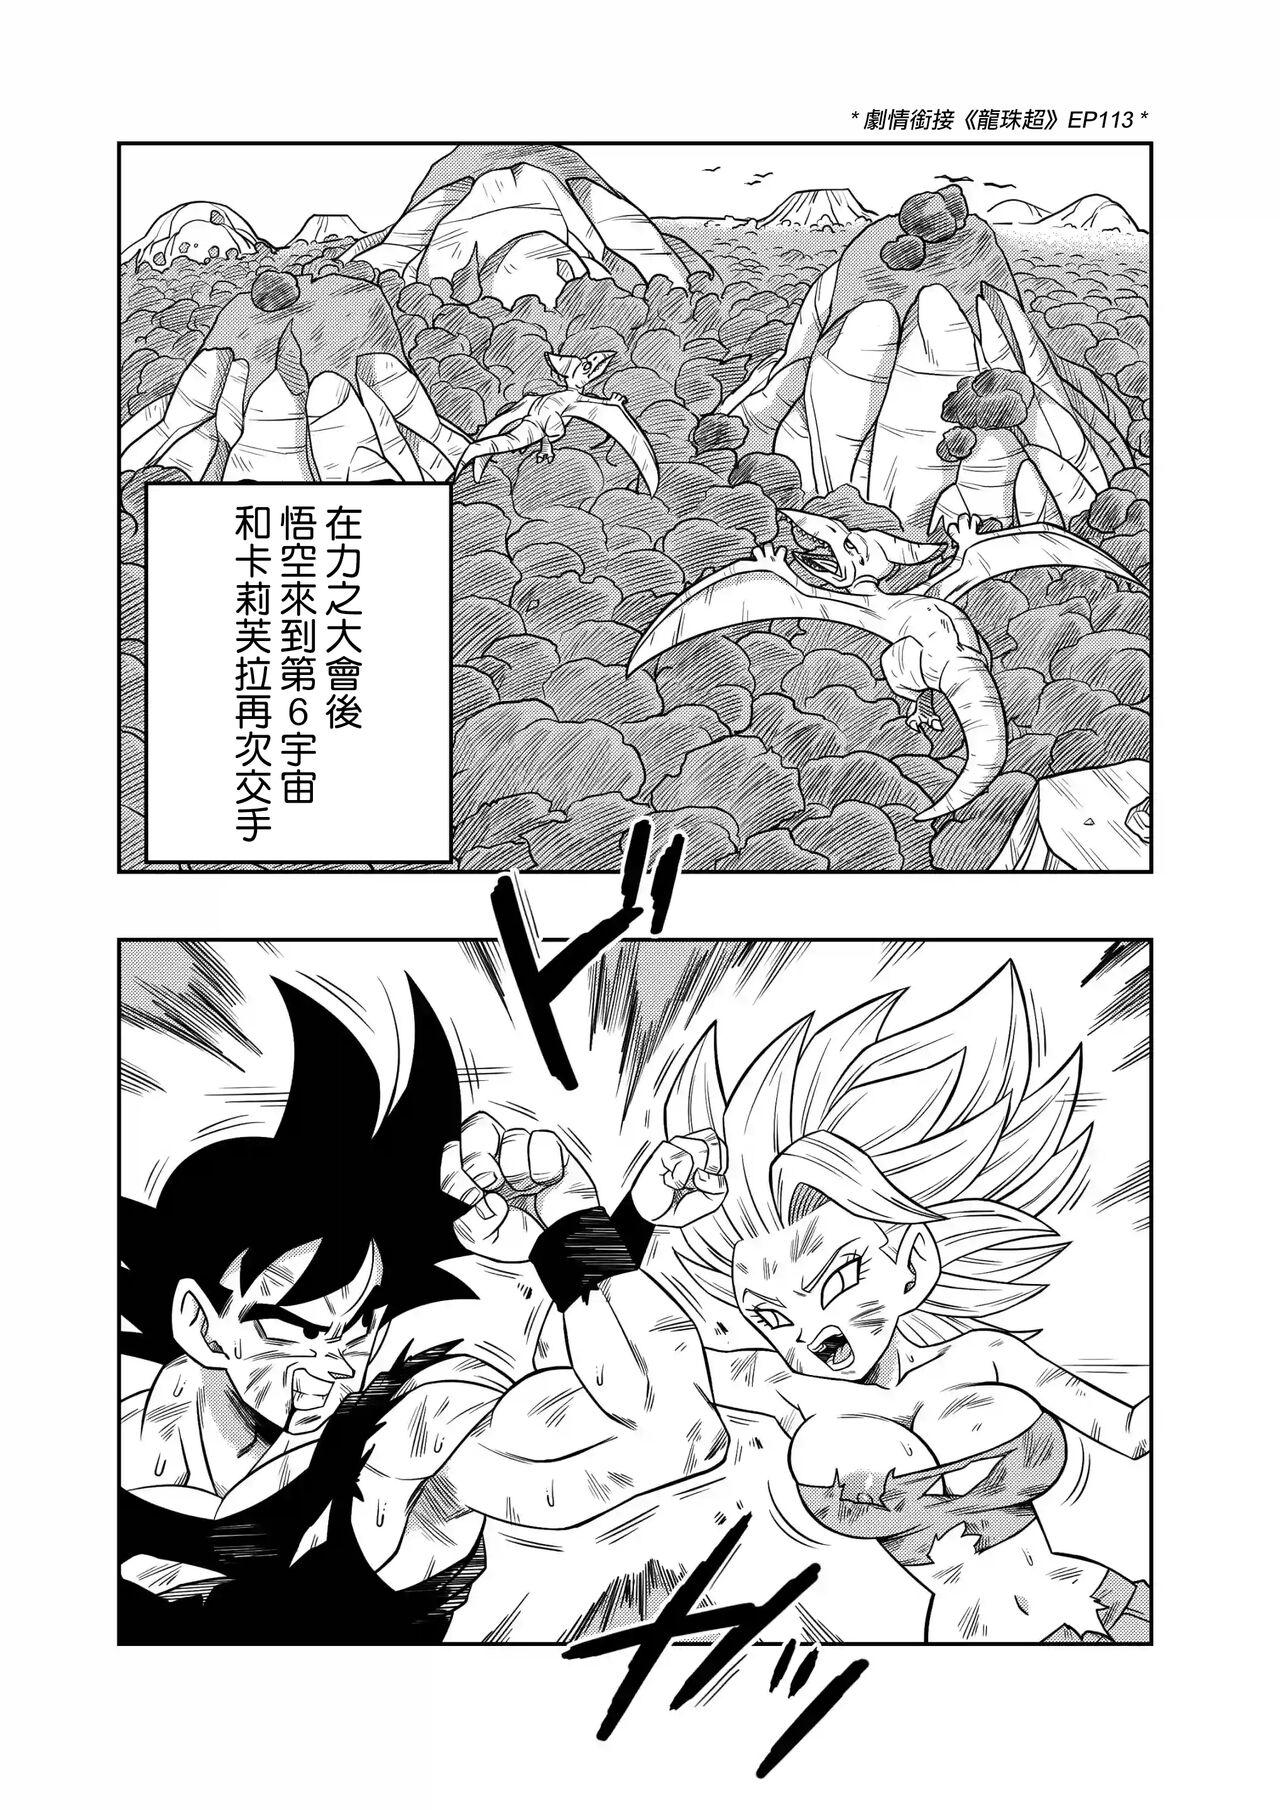 POV Fight in the 6th Universe!!! - Dragon ball super Massages - Page 3